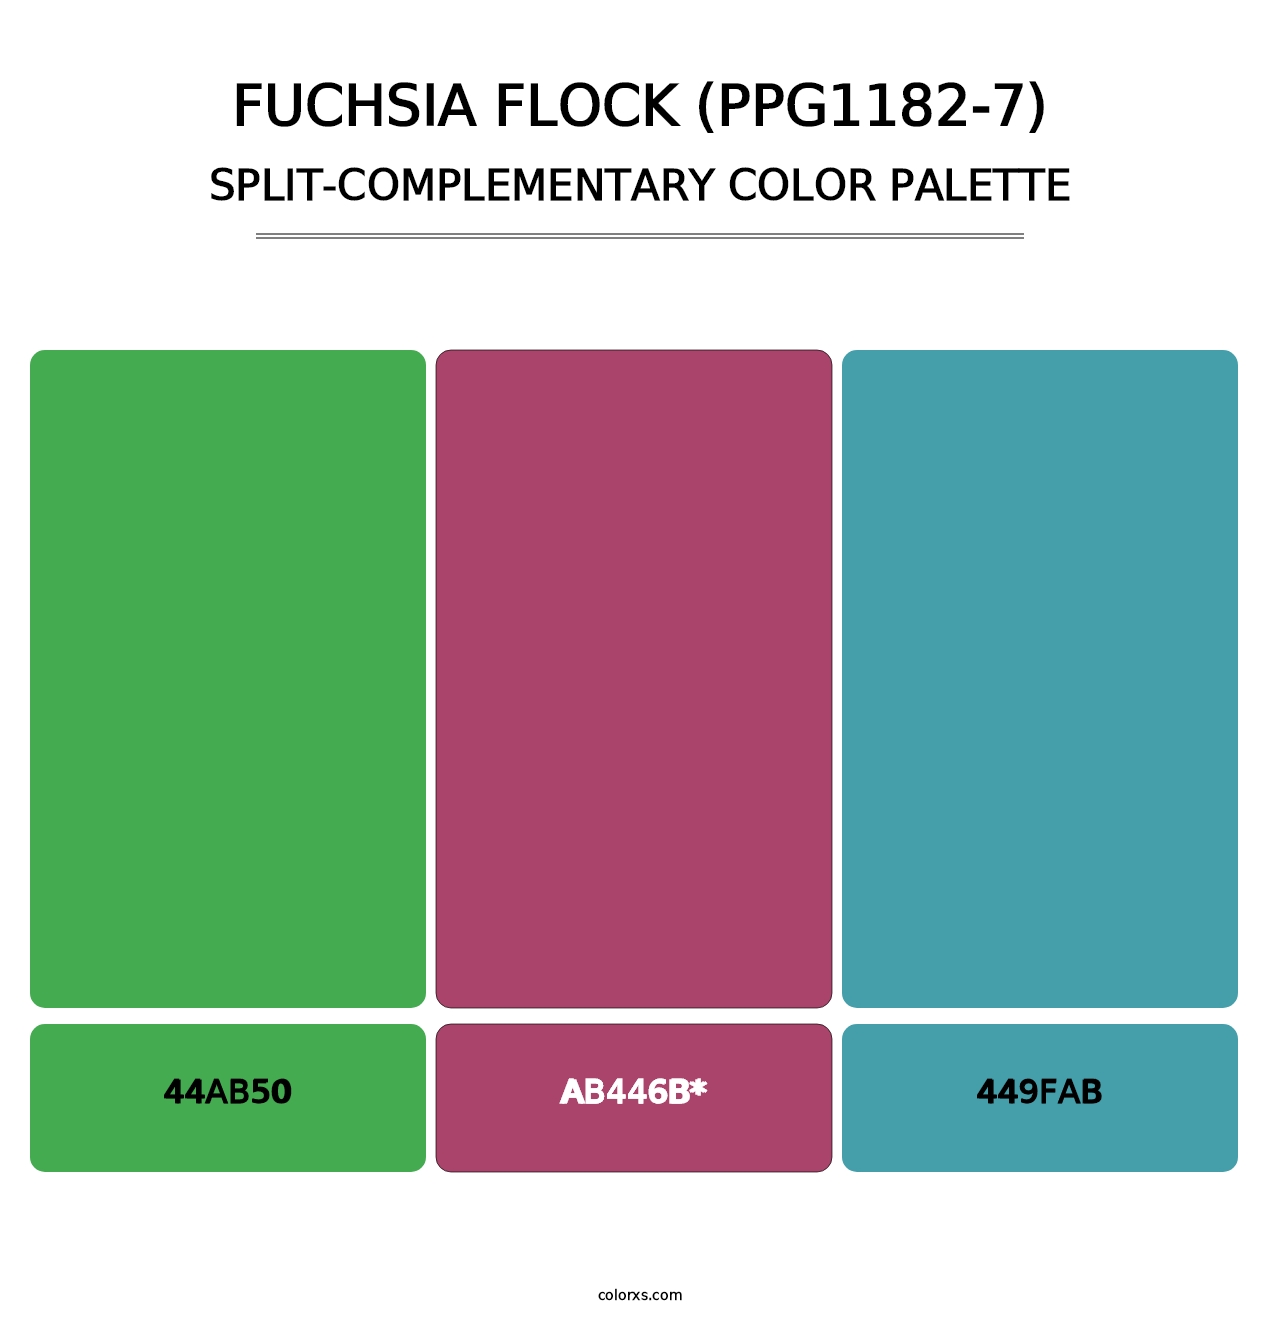 Fuchsia Flock (PPG1182-7) - Split-Complementary Color Palette